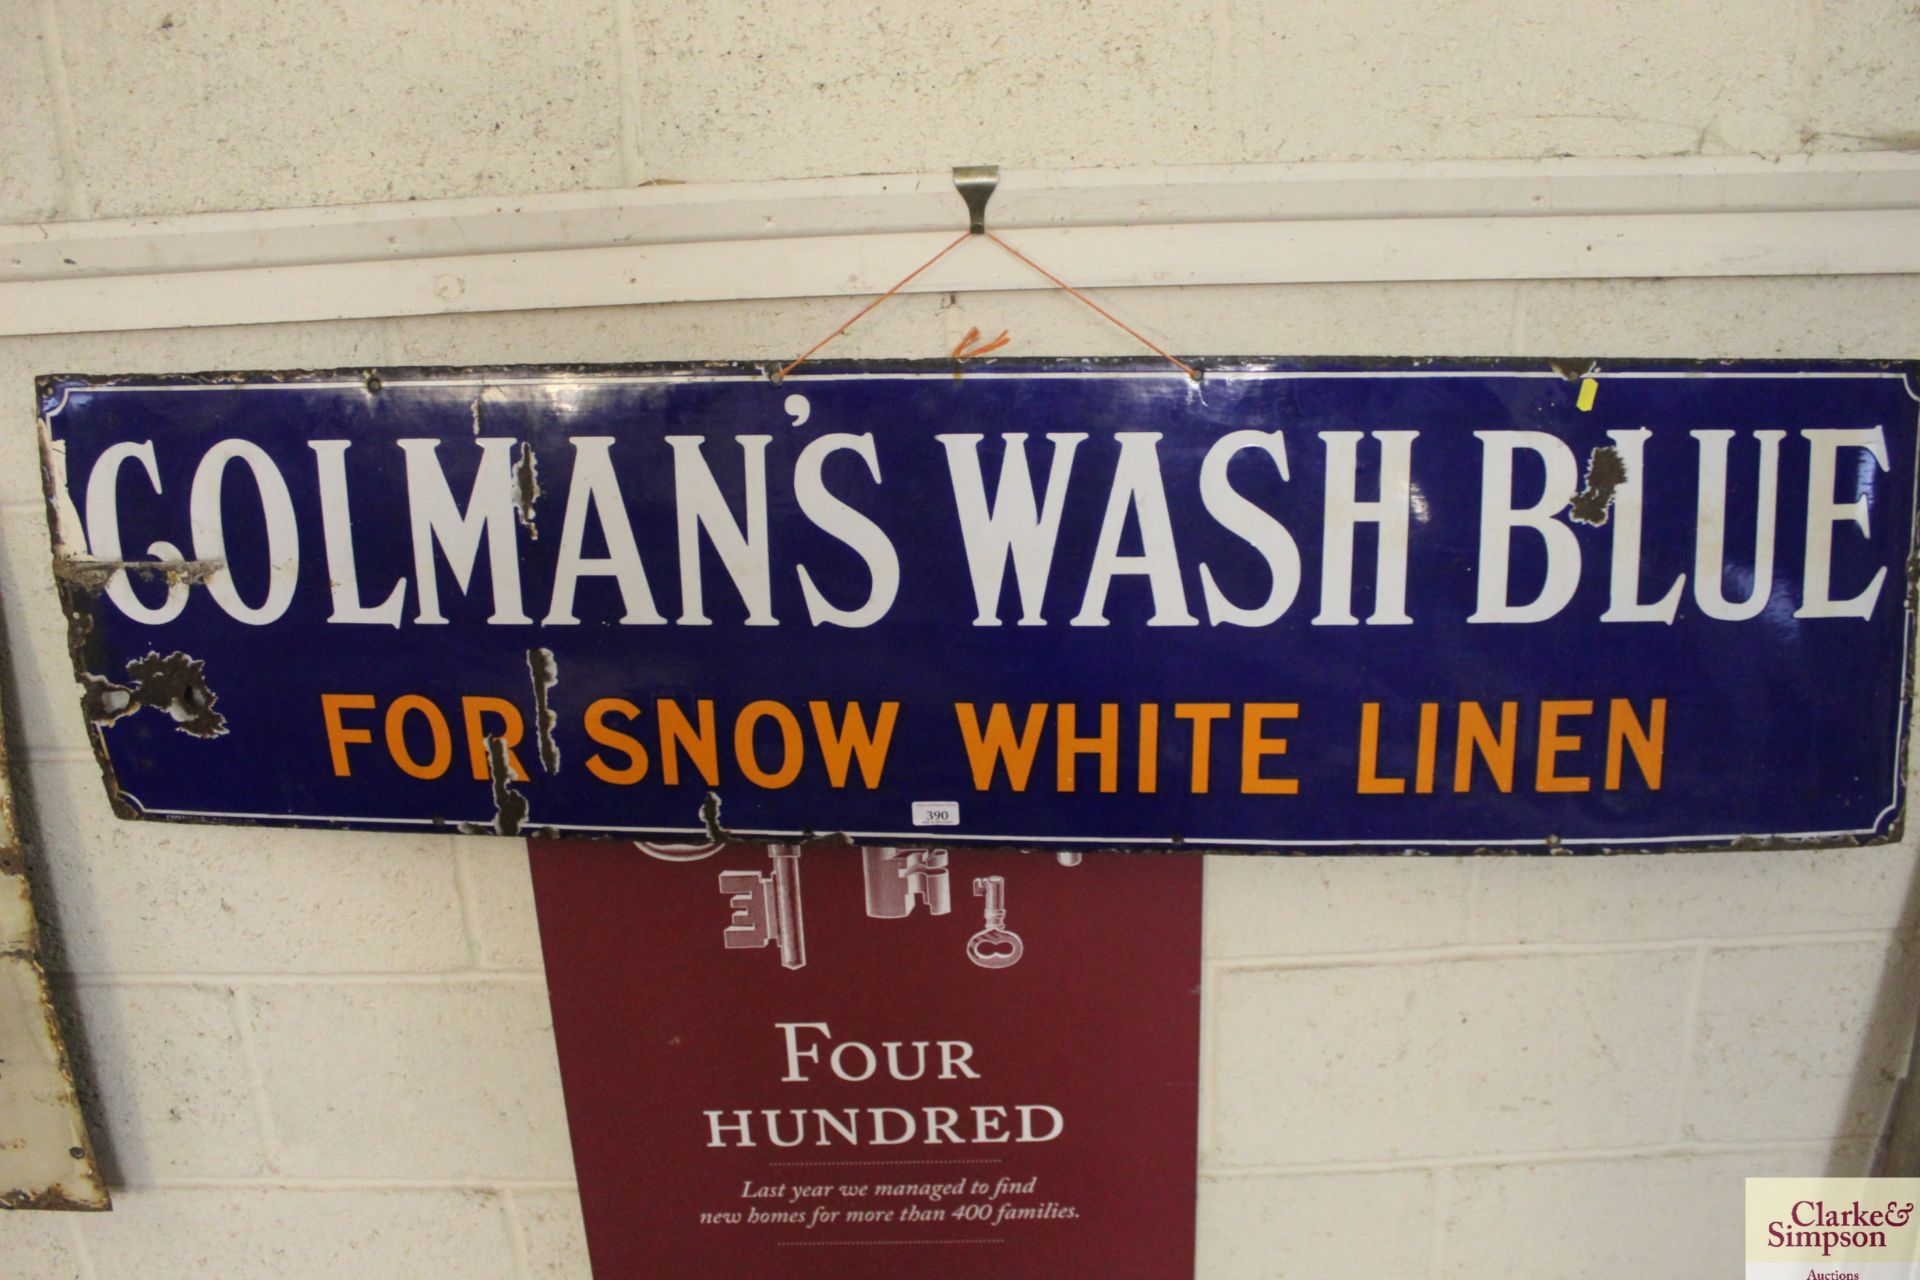 A "Colman's Wash Blue For Snow White Linen" enamel